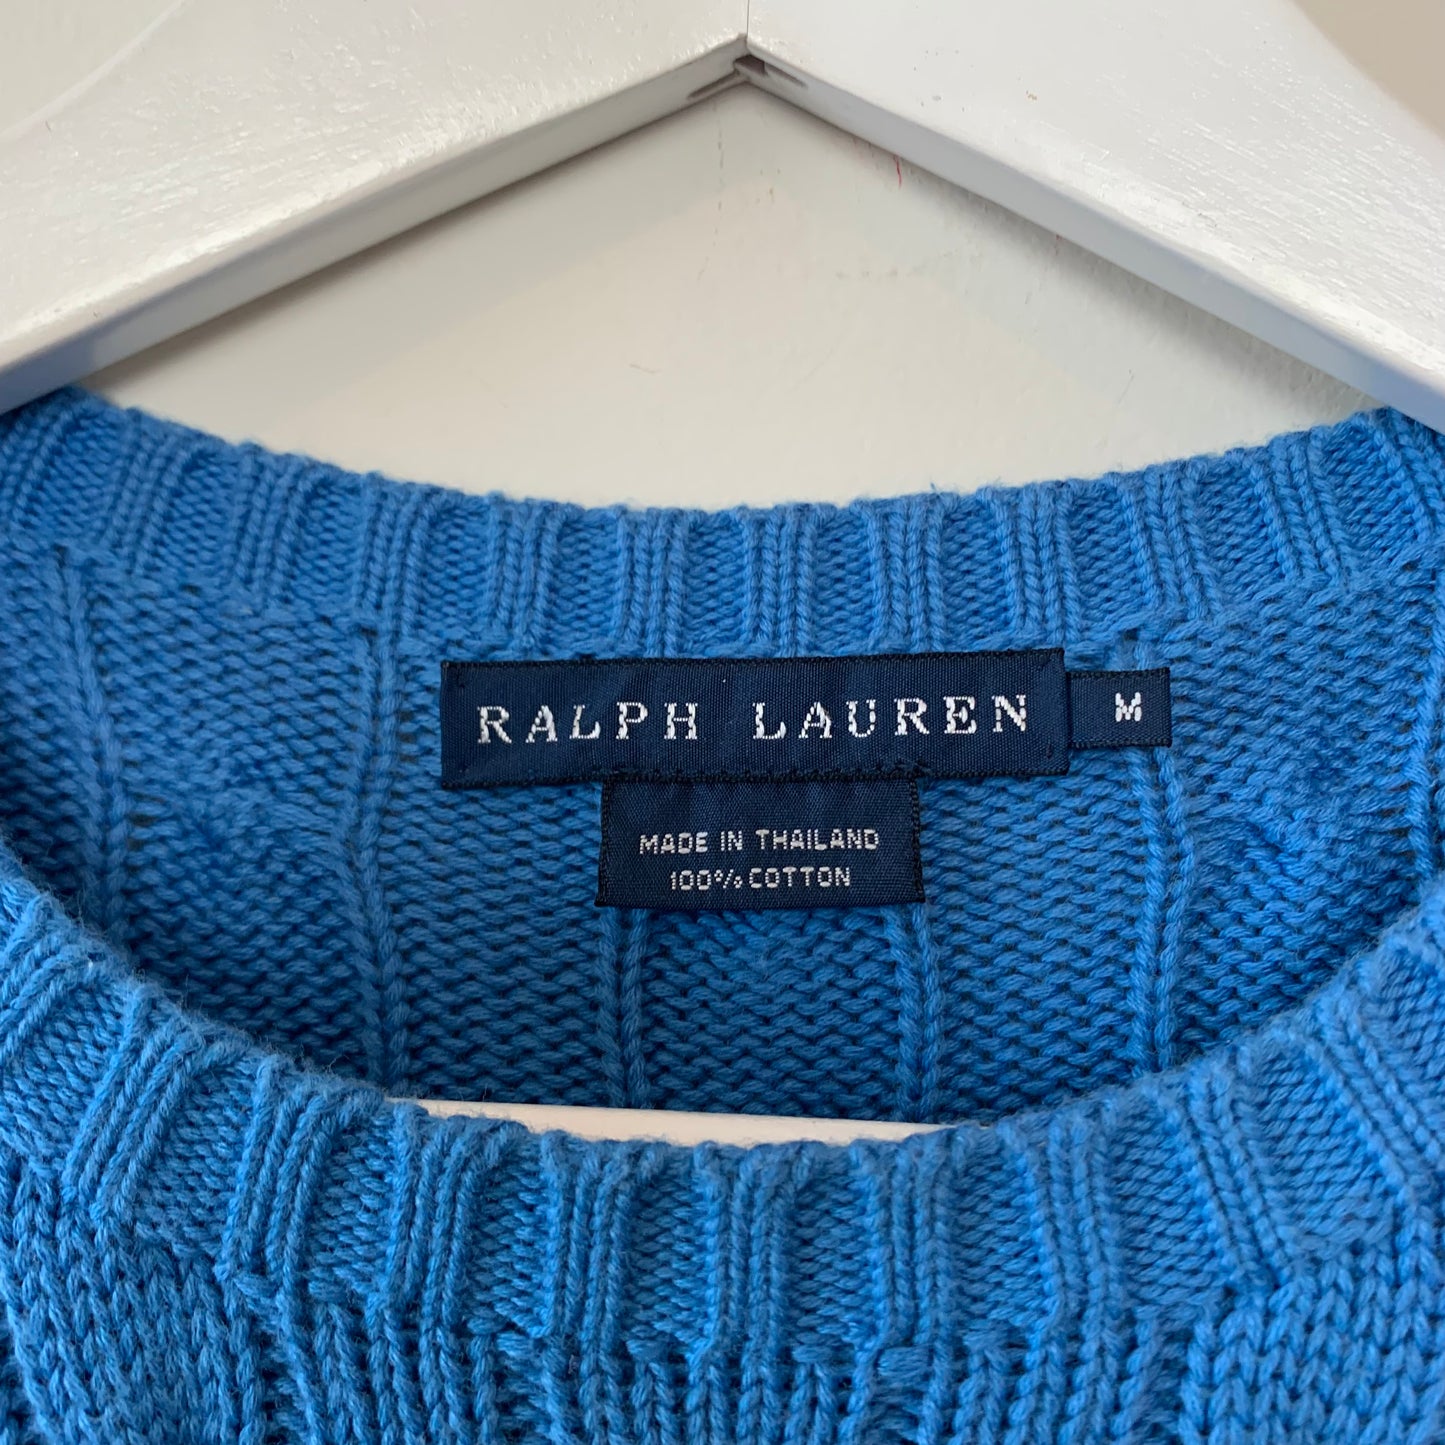 Ralph Lauren Cable-Knit Cotton Crewneck Sweater Blue Medium